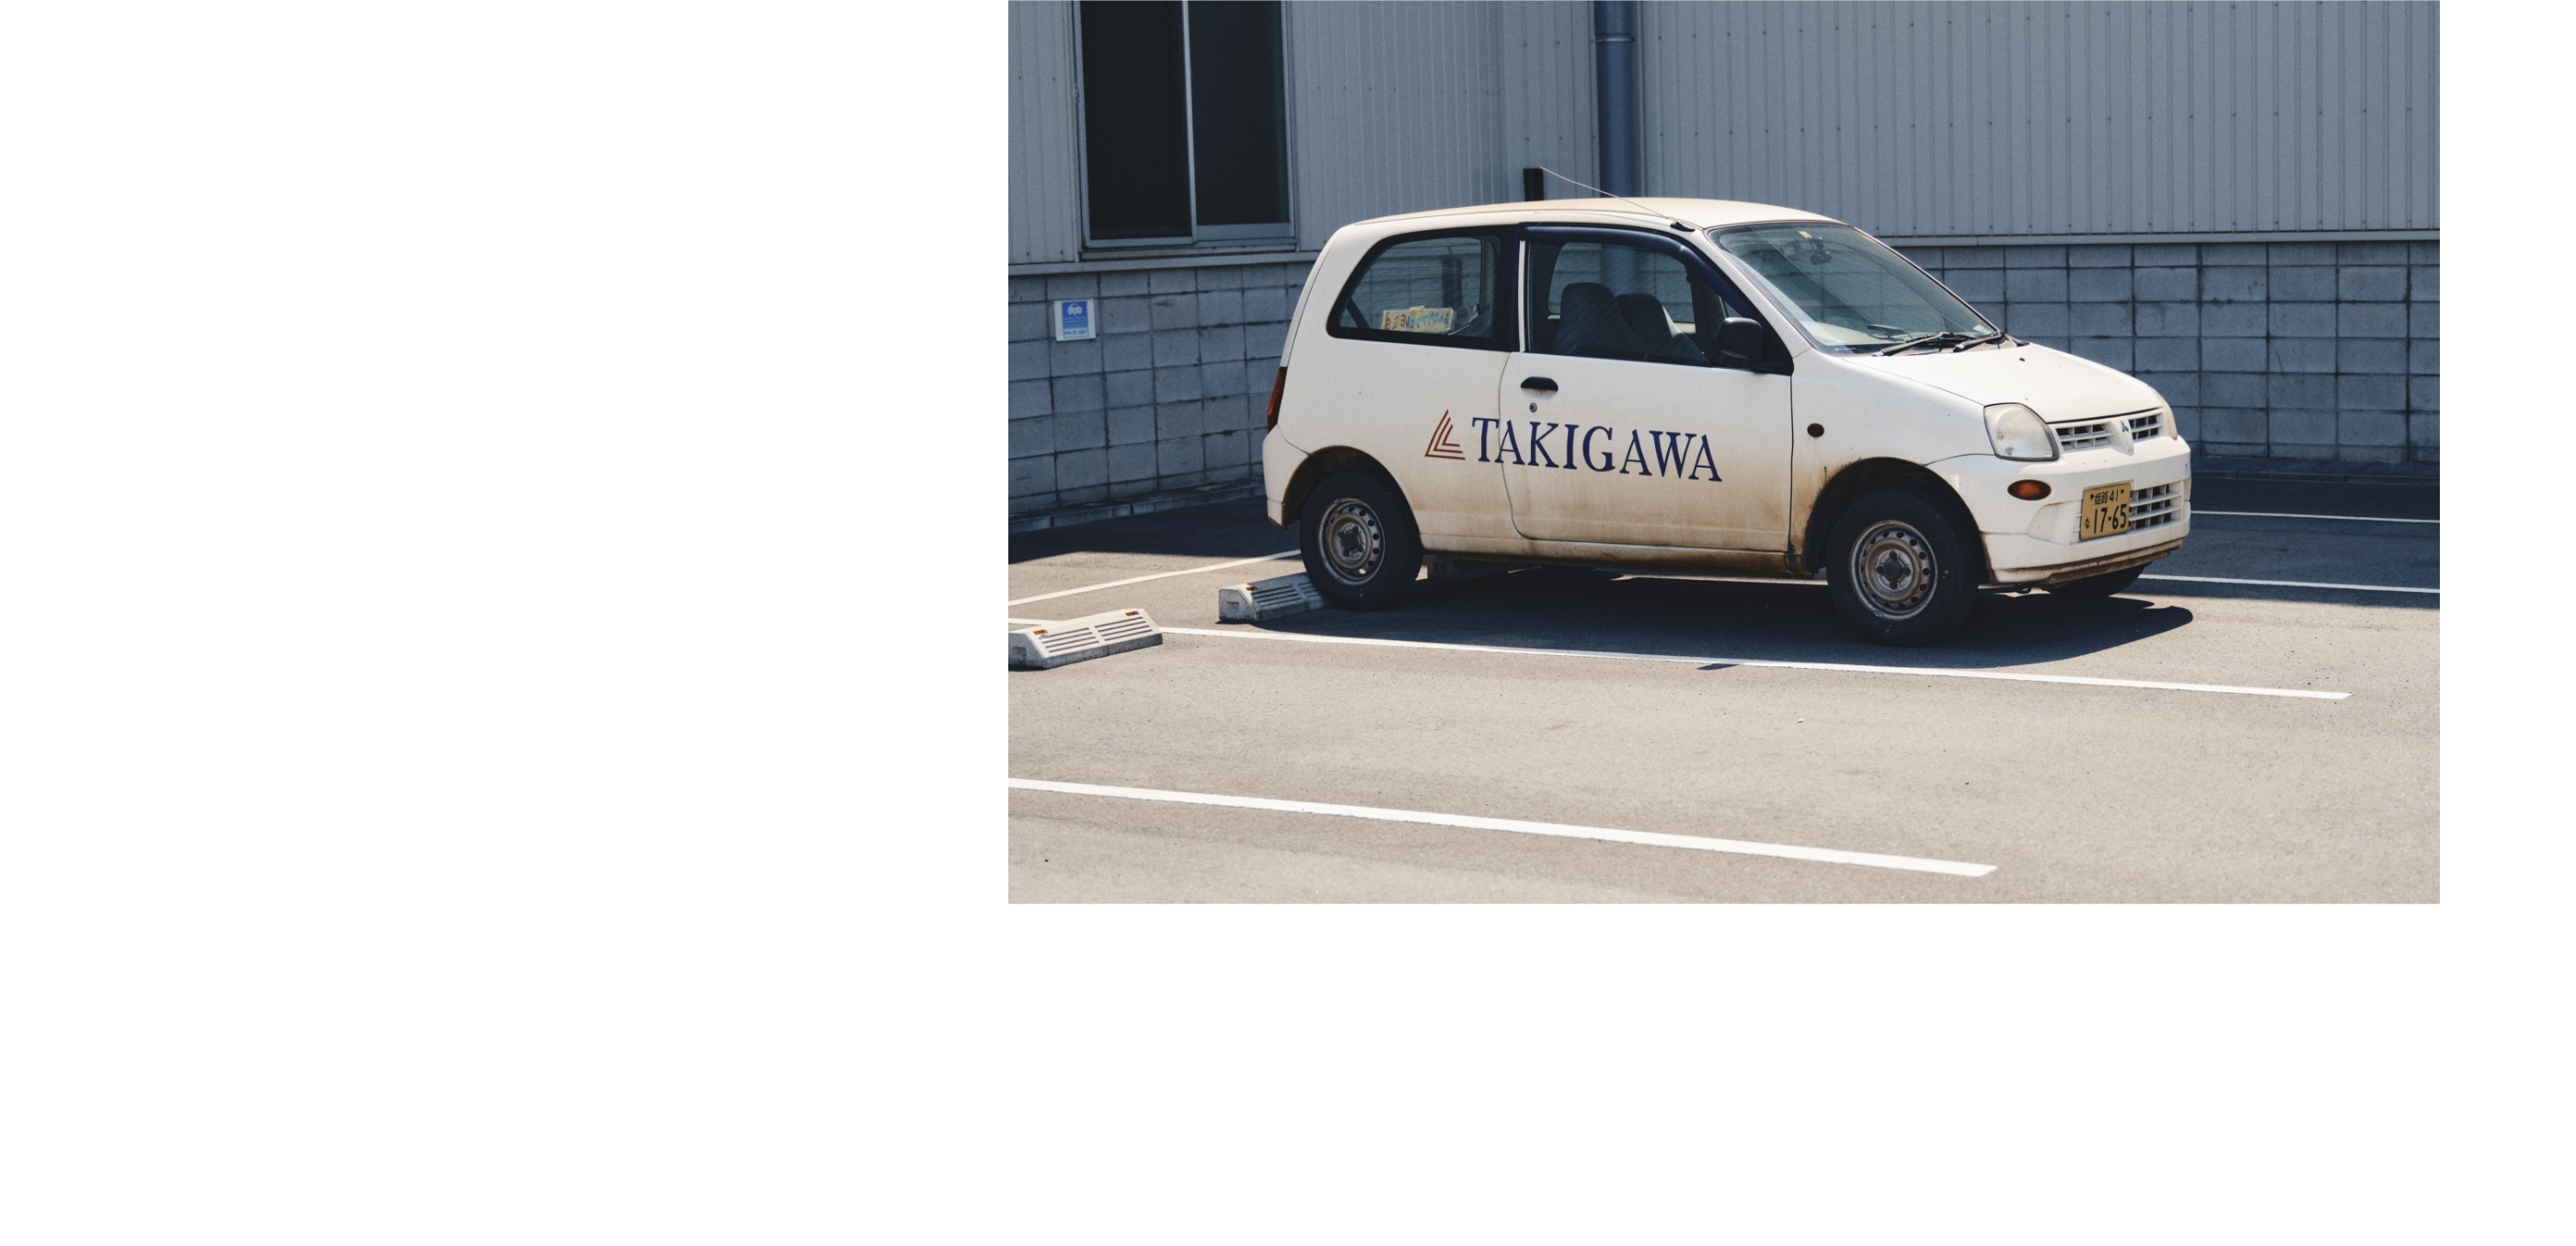 THE ORDINARY LIFE OF TAKIGAWA20